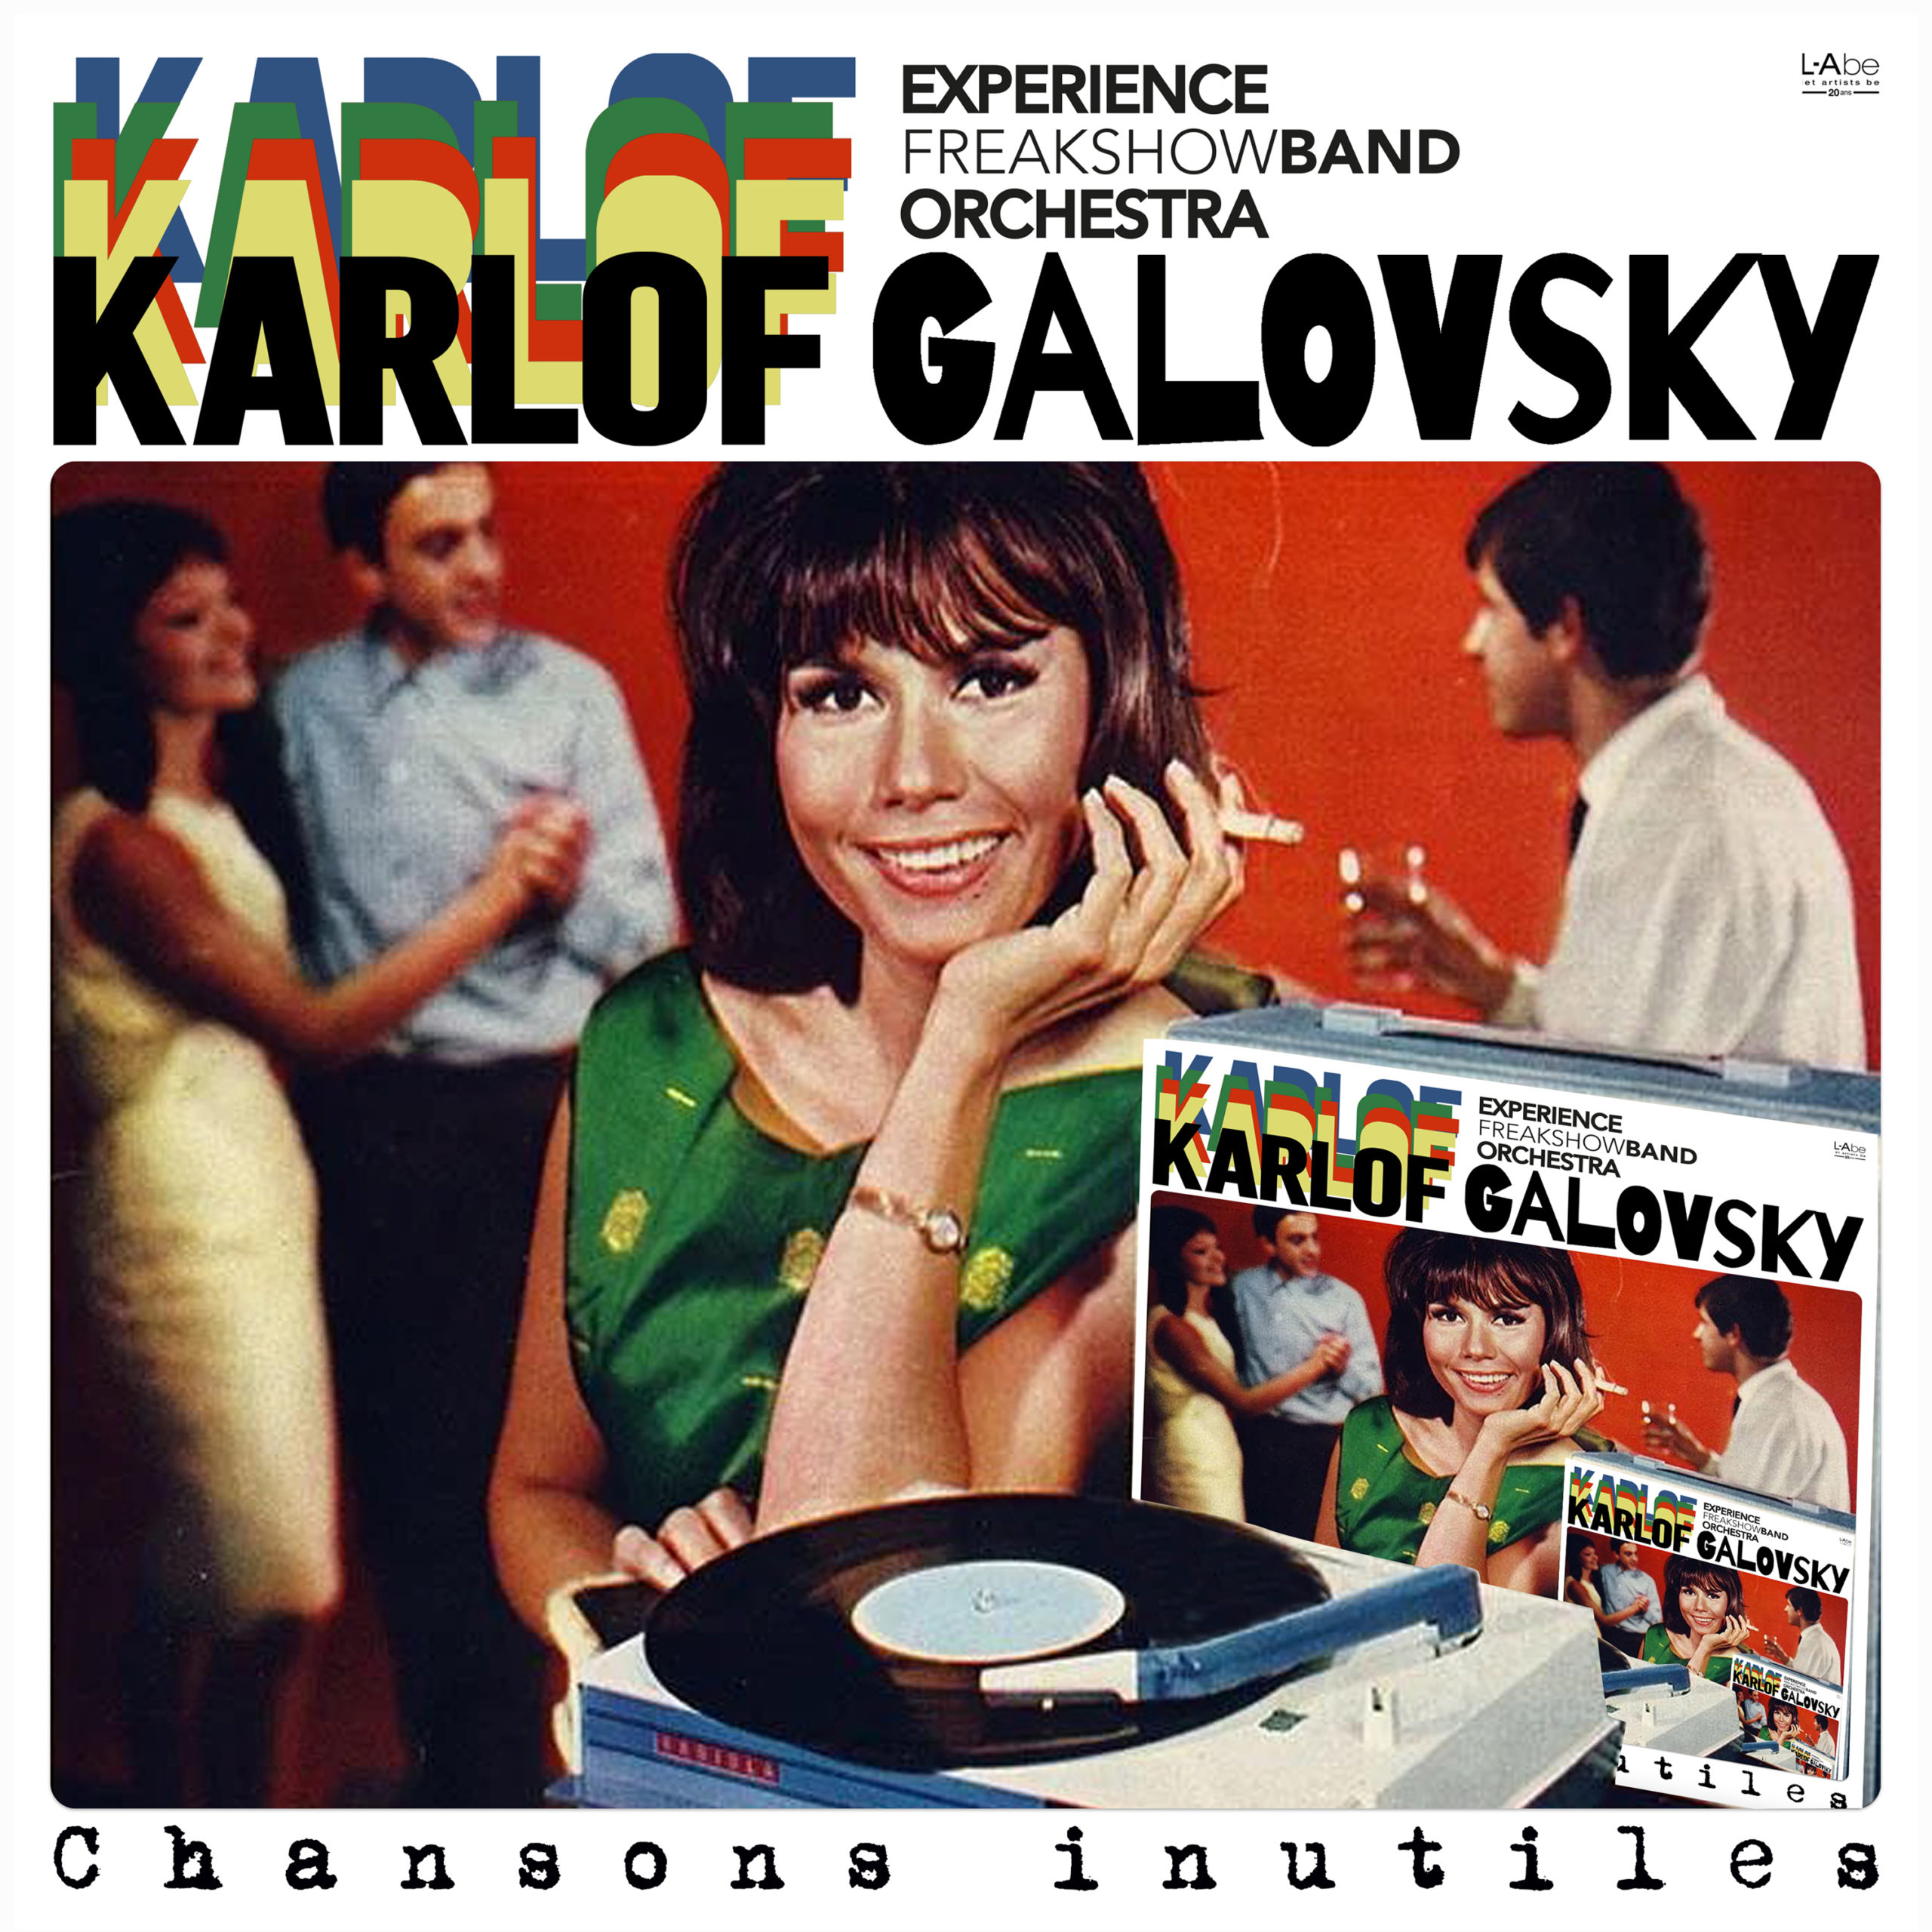 Karlof Galovsky Experience freak show band orchestra